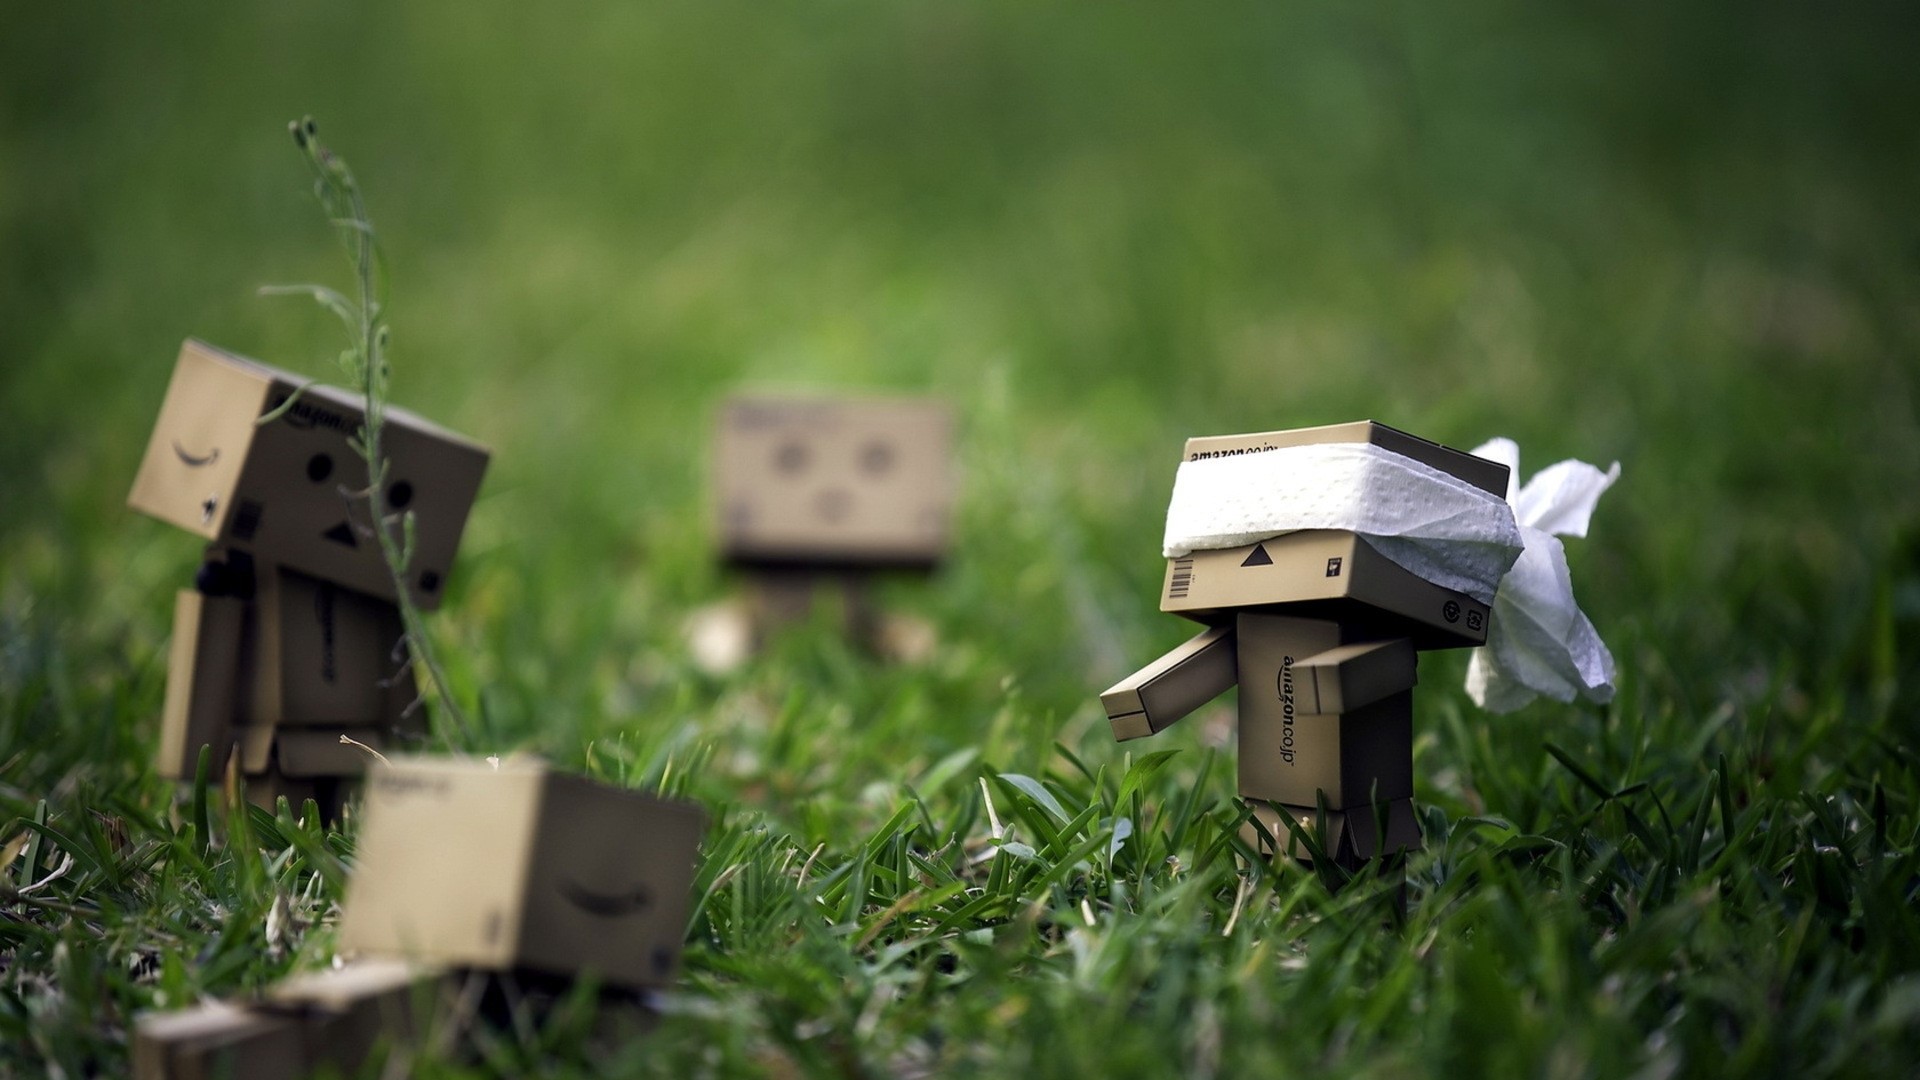 Danboard Cardboard Robots Hide And Seek Grass